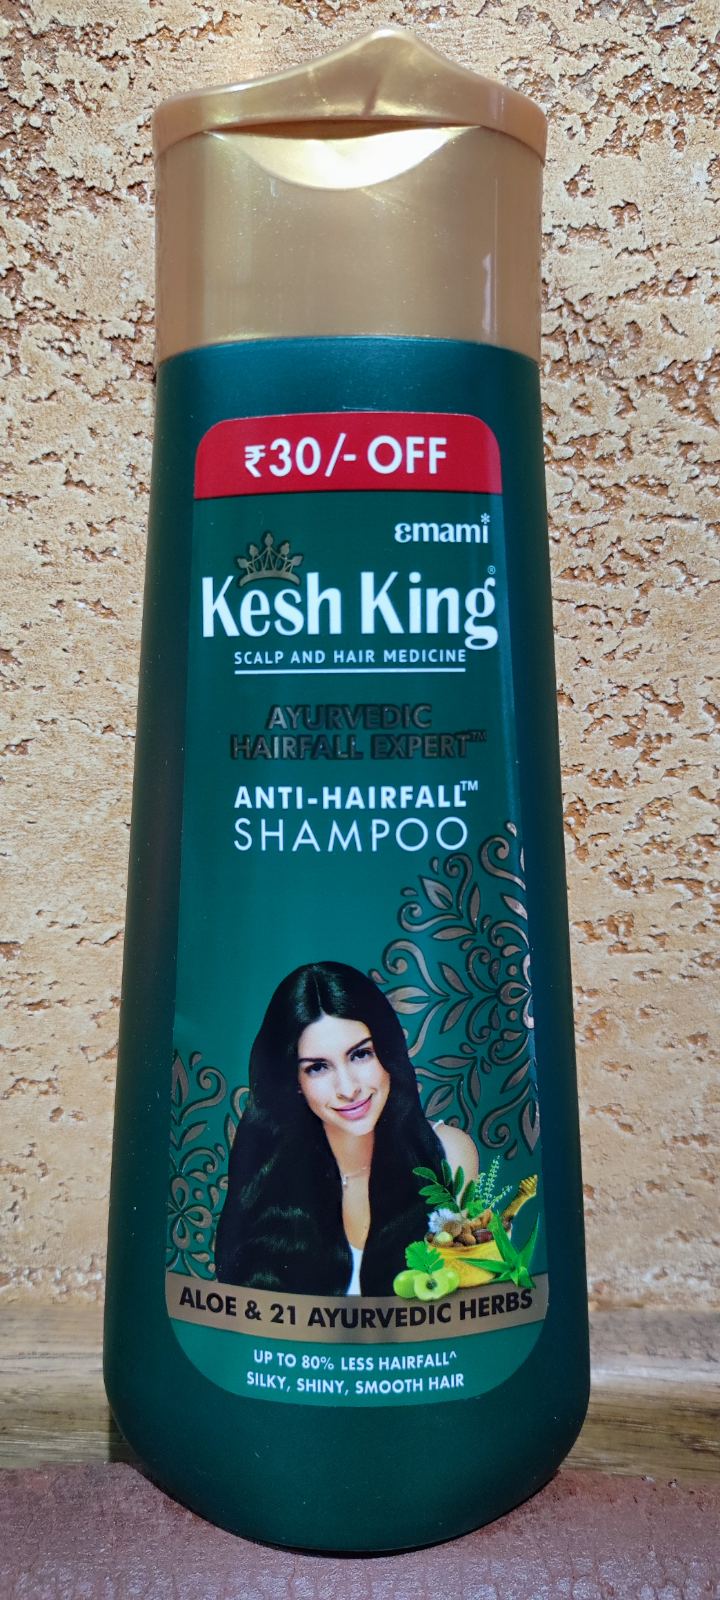 Кеш кинг шампунь Против выпадения волос Emami Kesh king Anti-Hairfall Shampoo Травяной оздоравливающий Индия 200мл